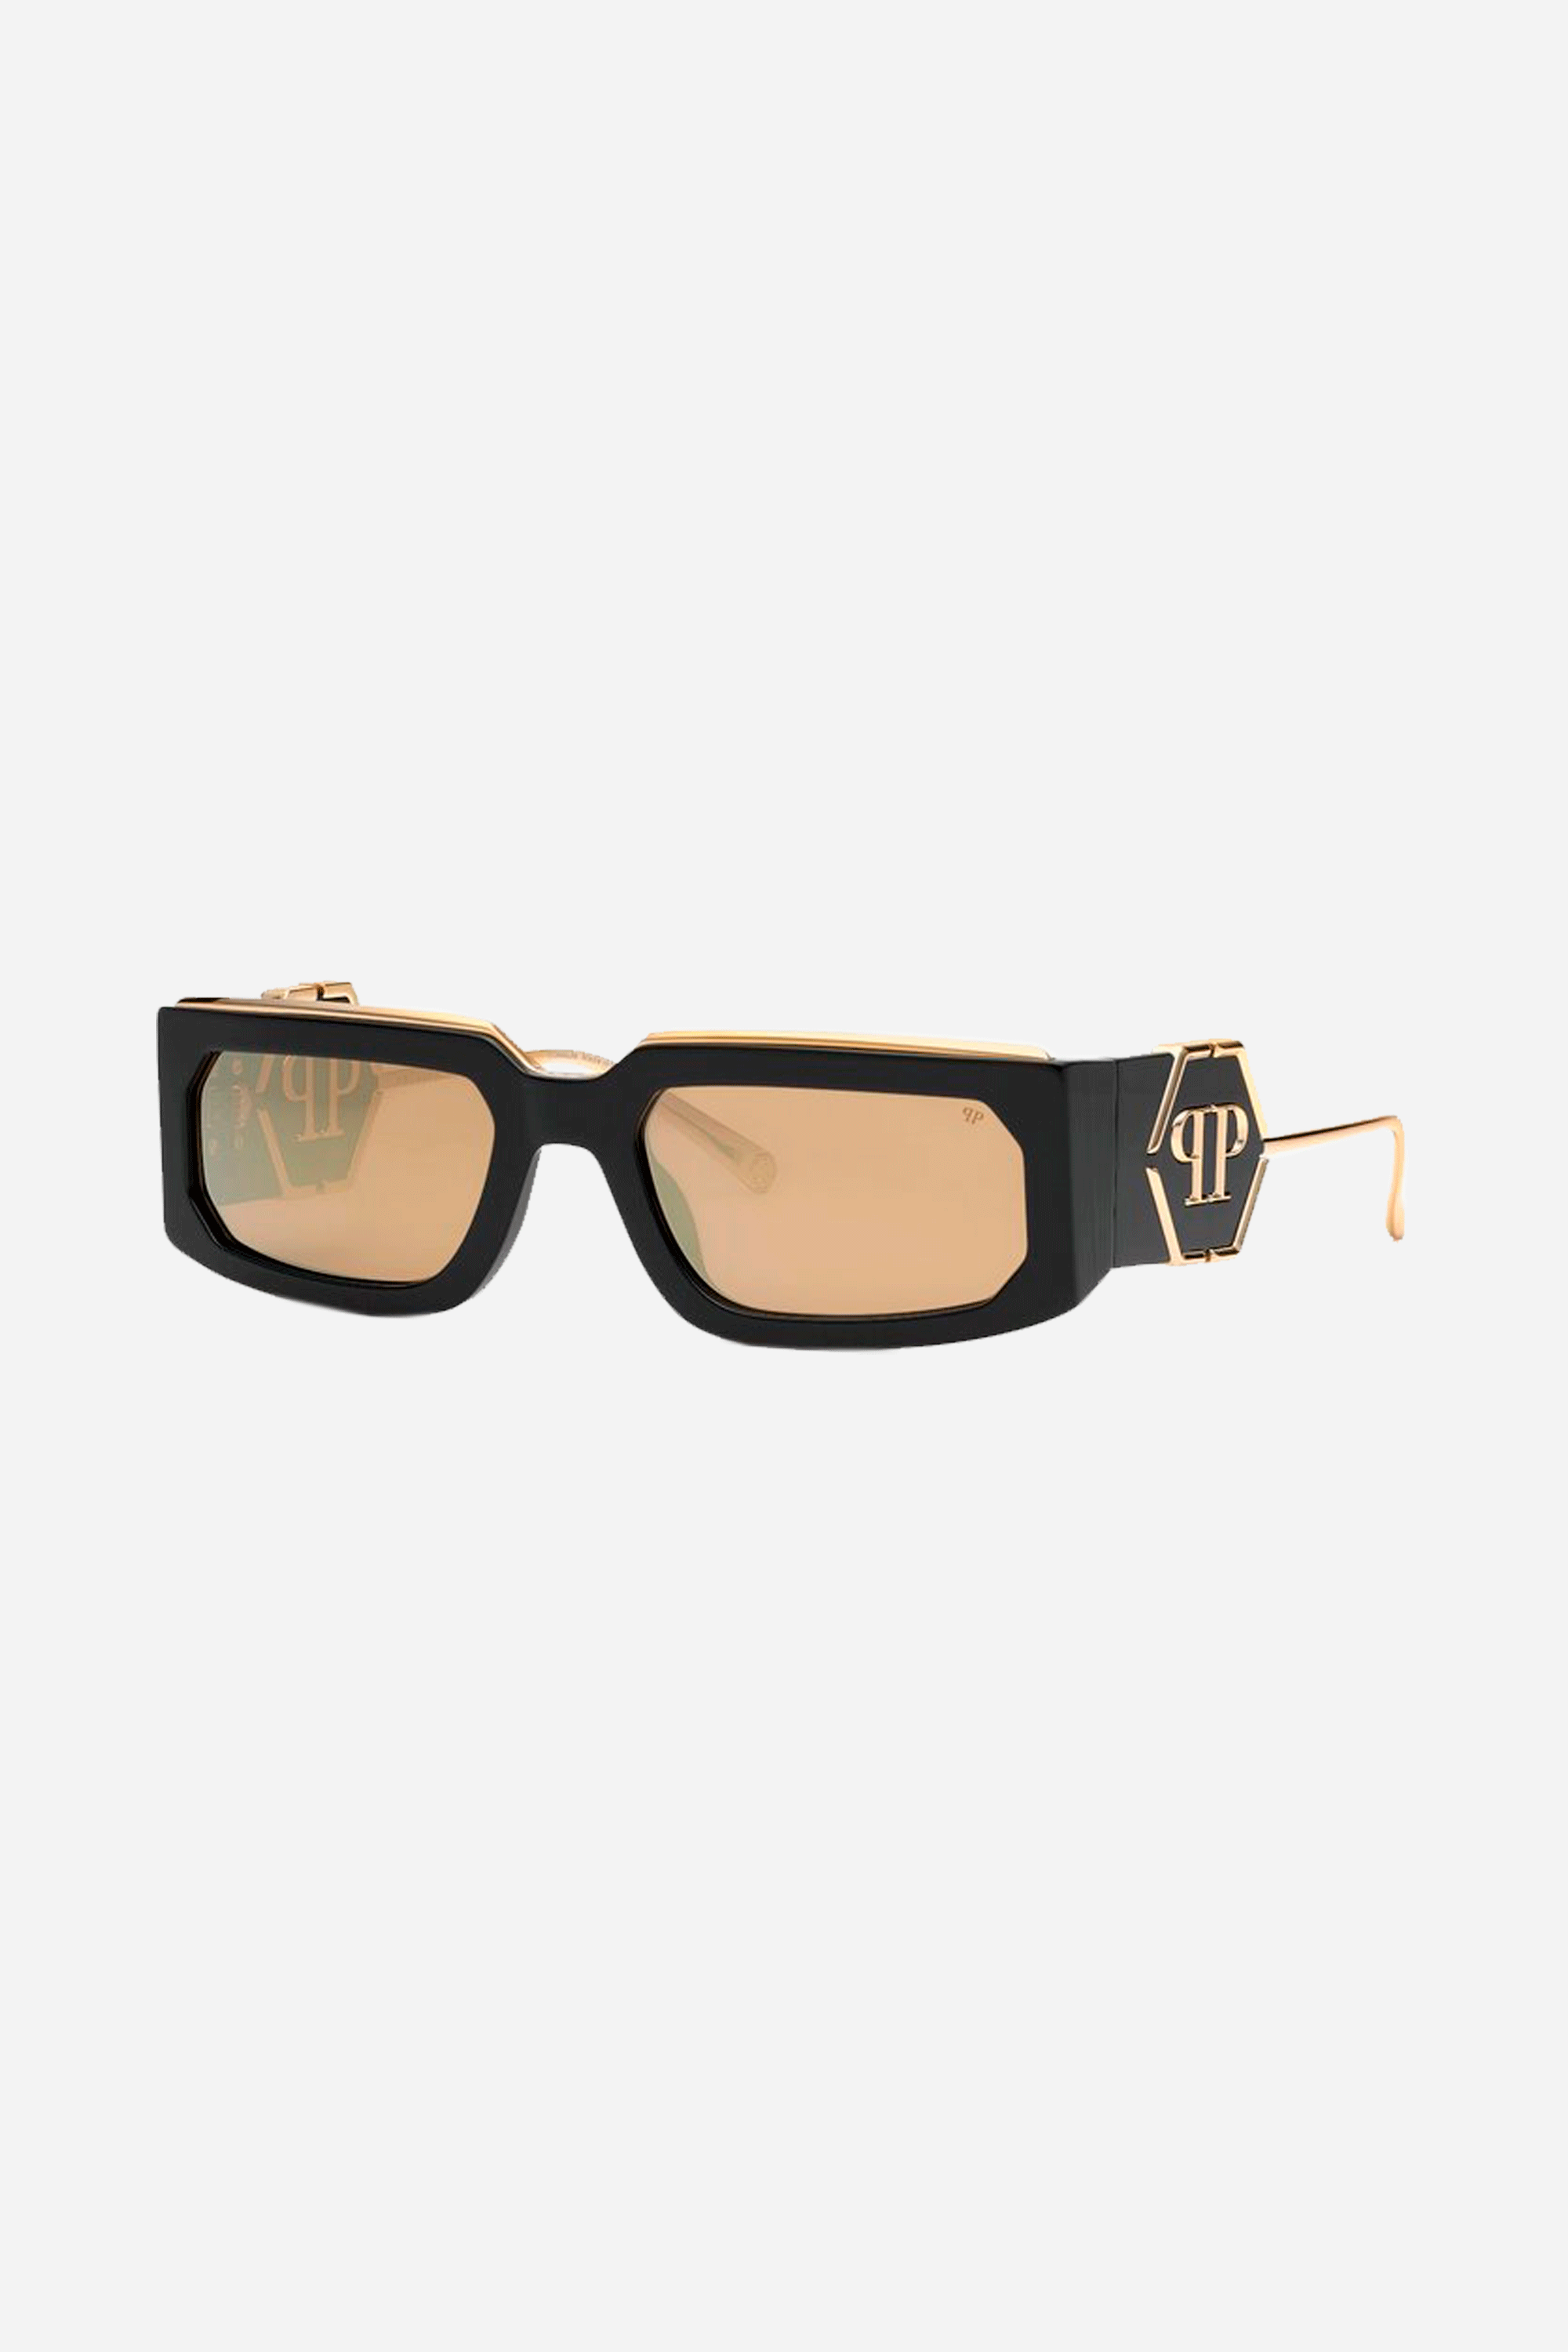 Philipp Plein rectangular black and gold sunglasses - Eyewear Club